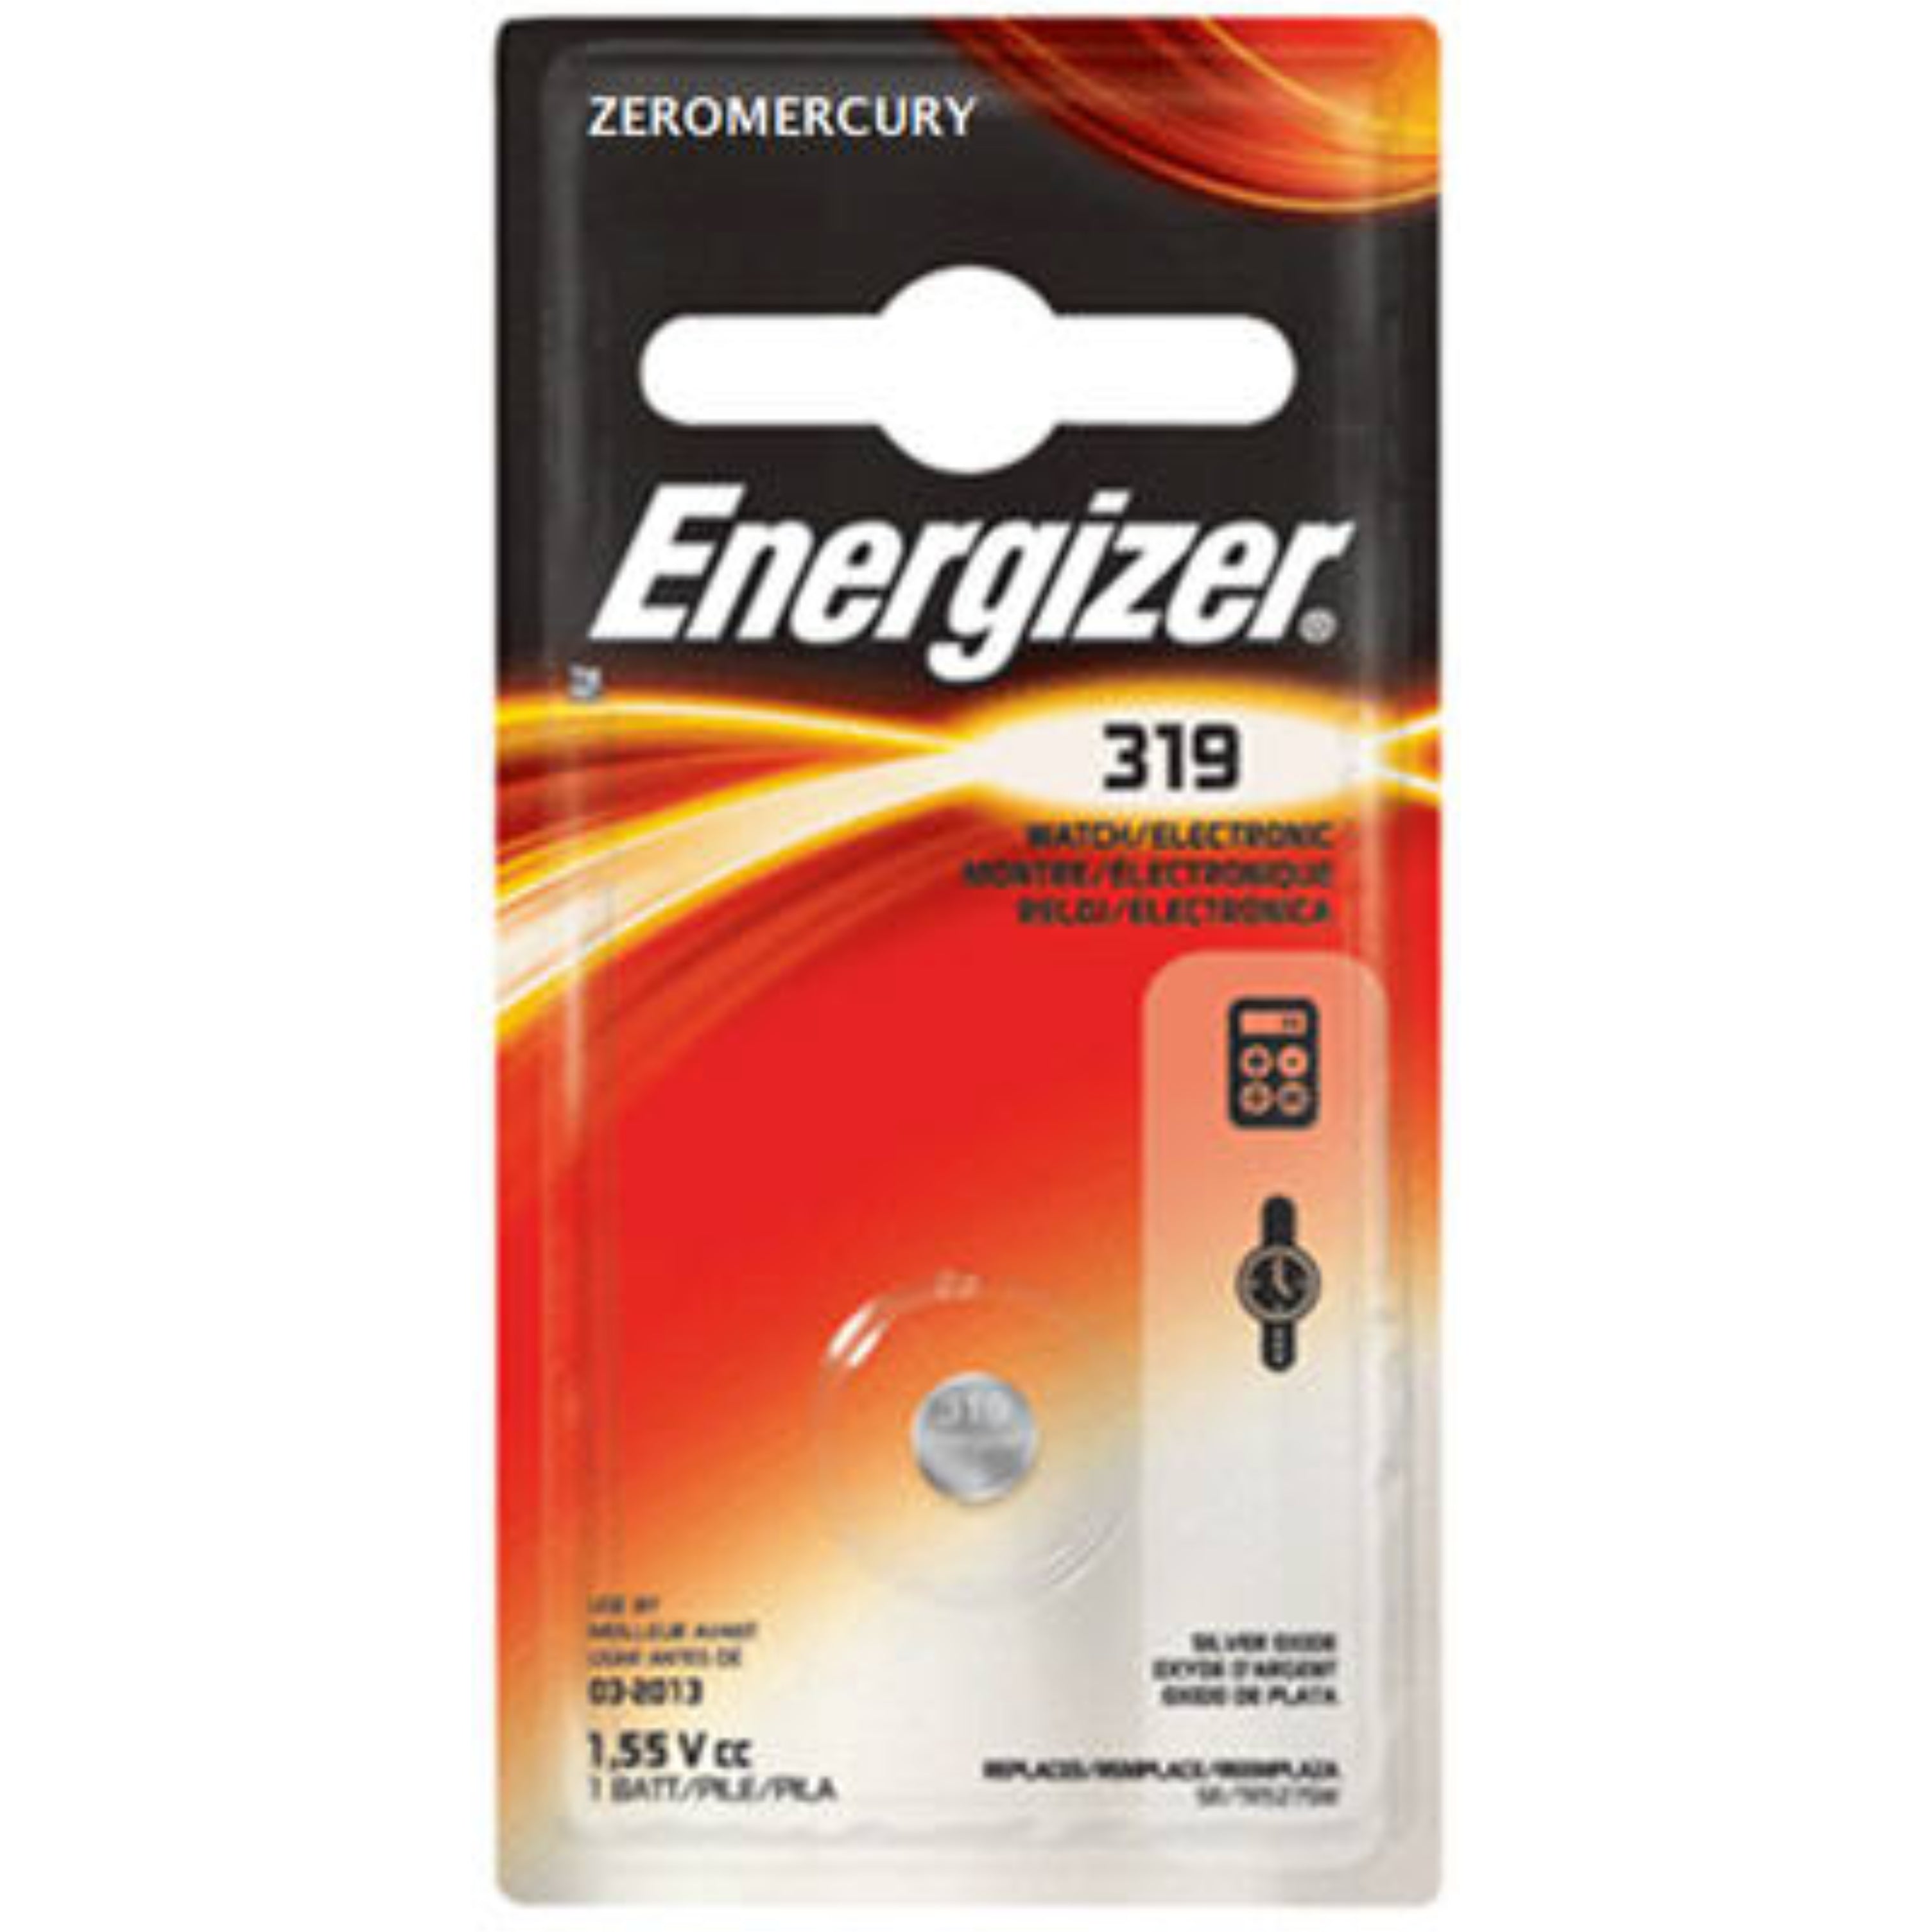 Energizer 319 Battery